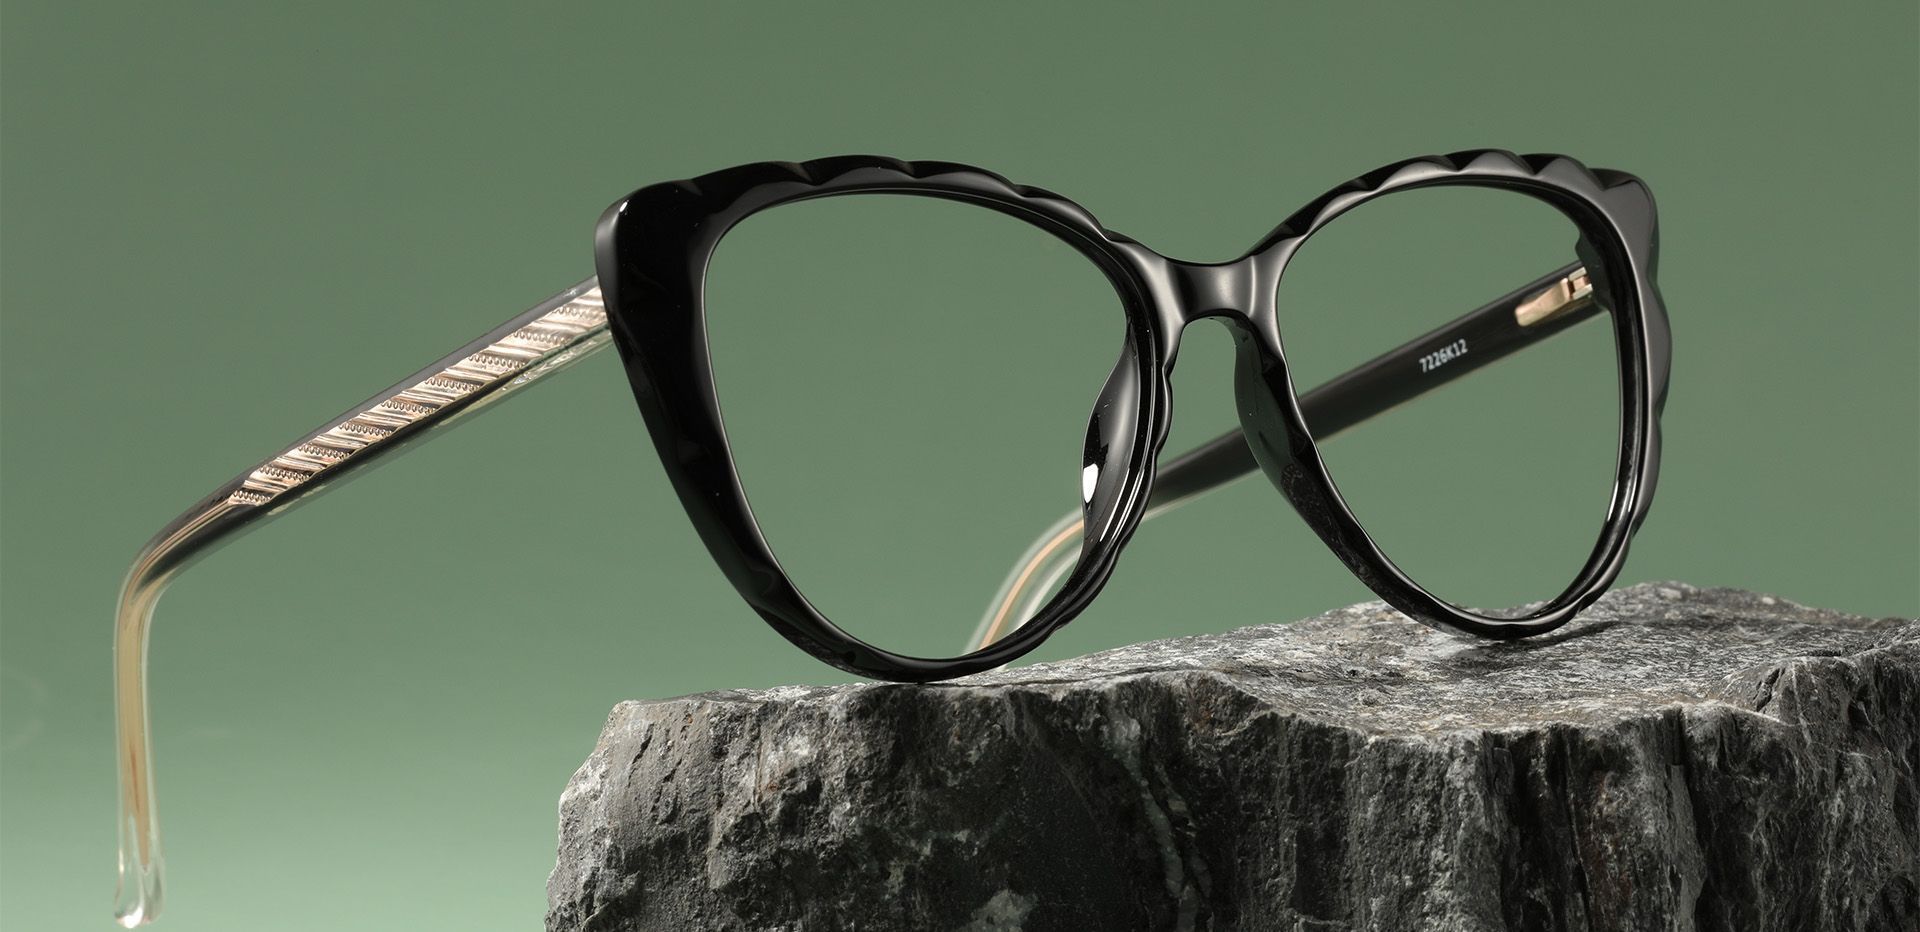 ZIROSAT 9910 Polarized Specsavers Clip On Sunglasses For Men And Women  Magnetic Clip On Optical Prescription Eyewear Eyeglasses 230607 From Men03,  $40.51 | DHgate.Com